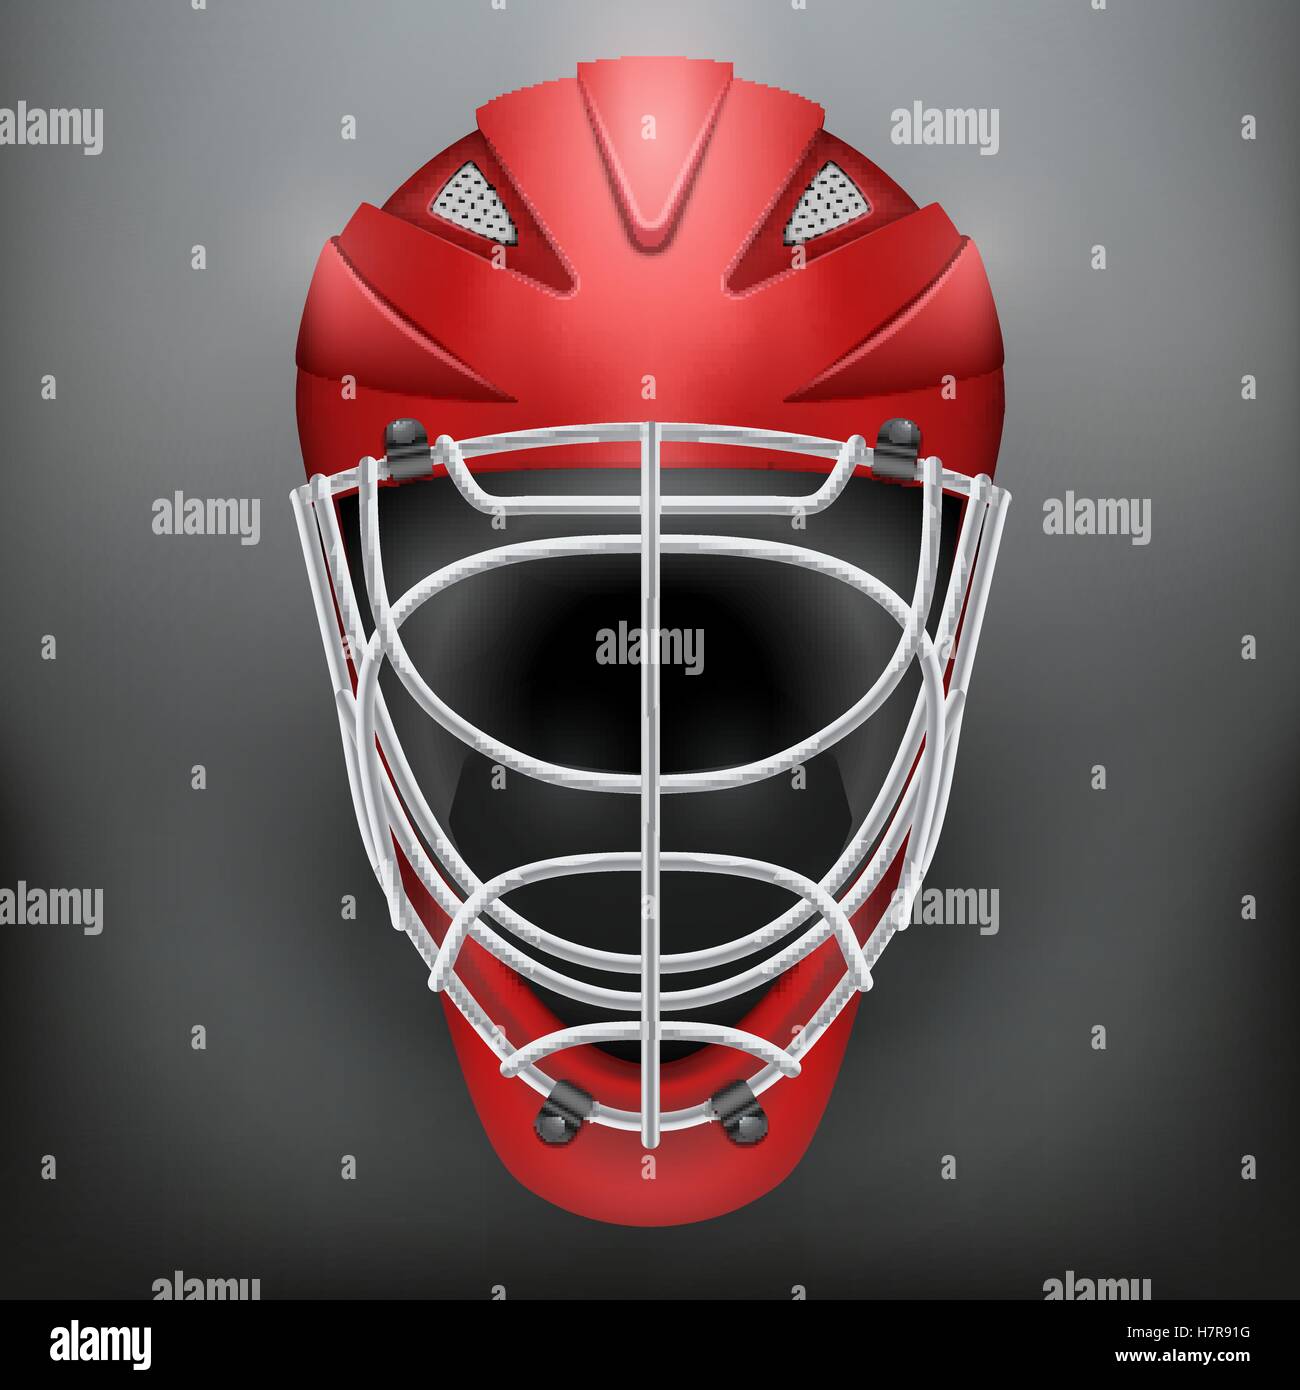 Classic Goalkeeper Ice and Field Hockey Helmet on dark Background. Copy space for text. Sport Equipment. Editable Vector illustr Stock Vector